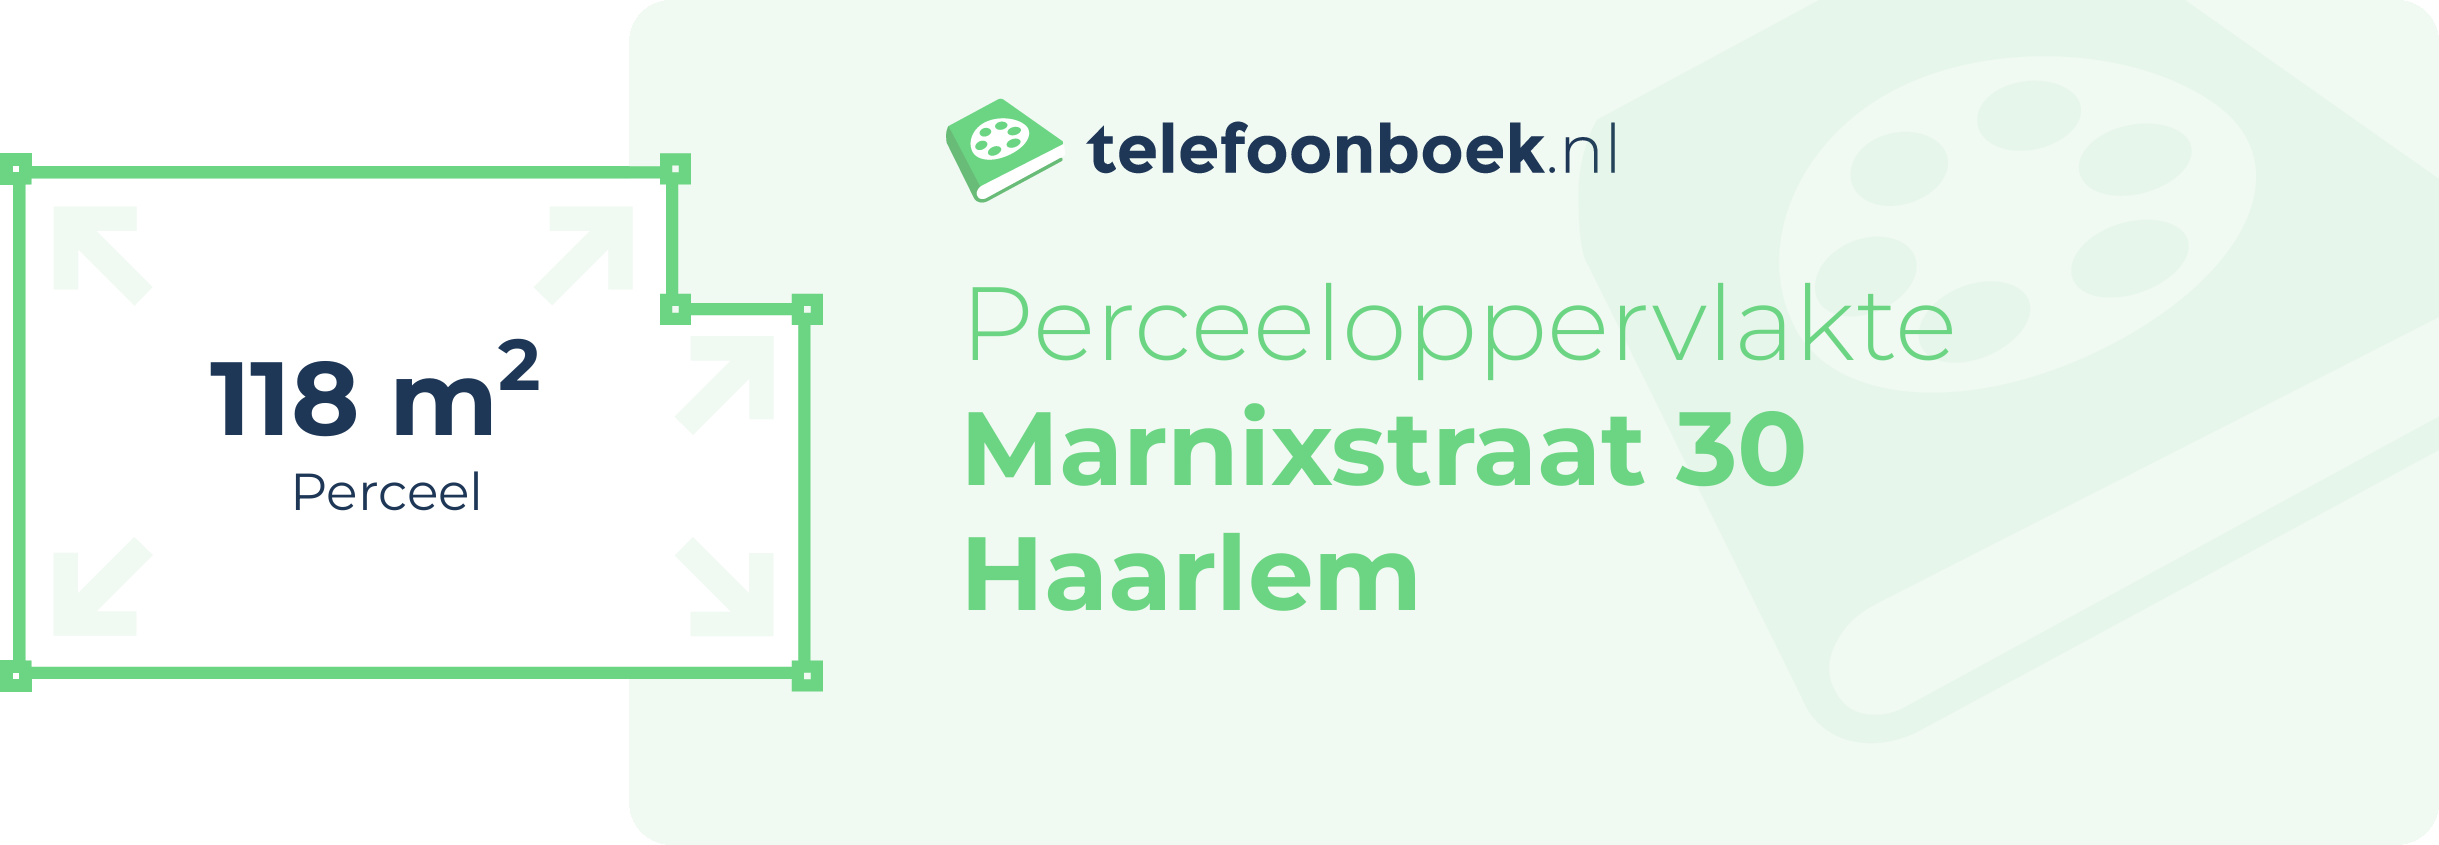 Perceeloppervlakte Marnixstraat 30 Haarlem